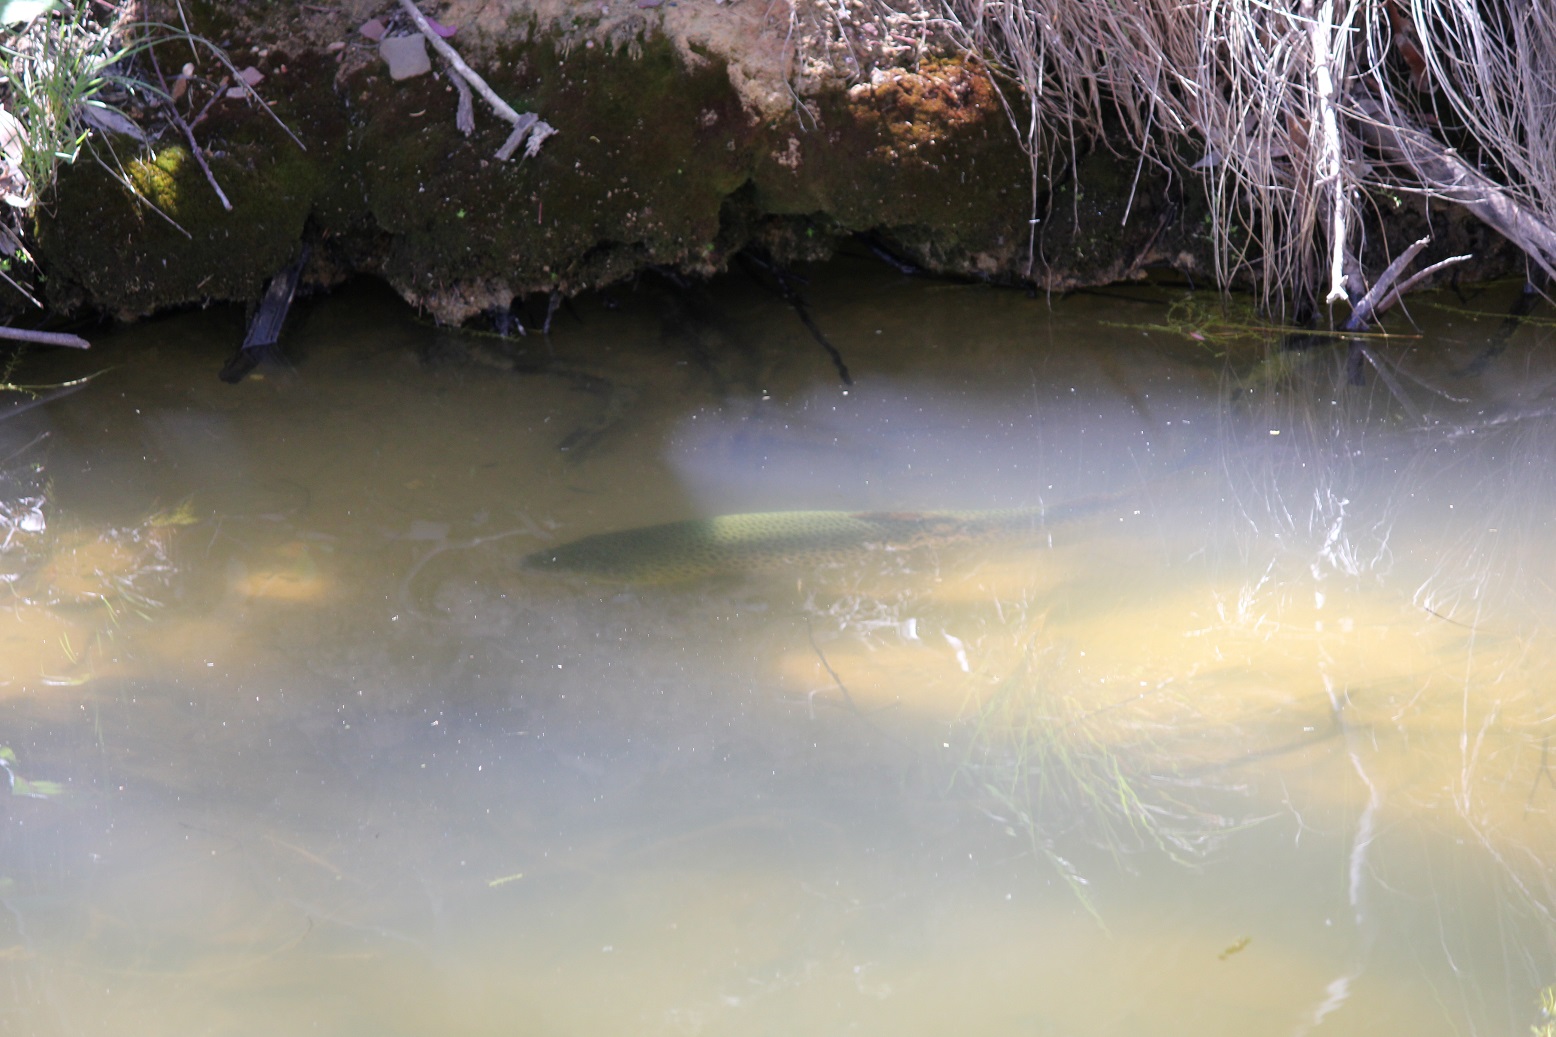 A trout sitting near an undercut bank